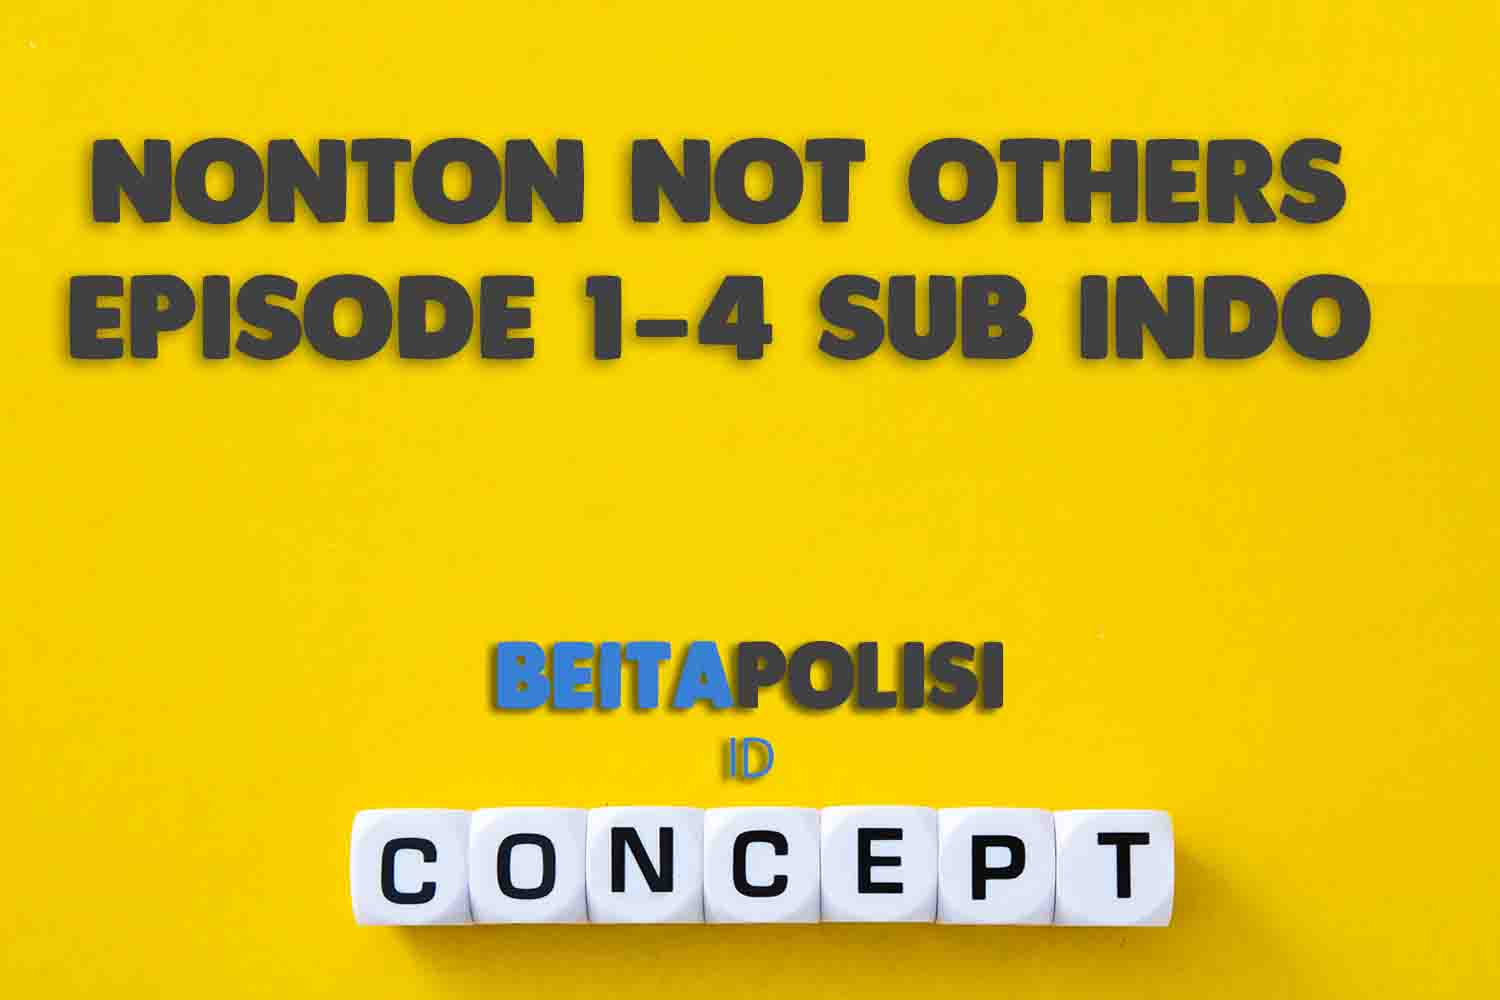 Nonton Not Others Episode 1 4 Sub Indo Bukan Juraganfilm Klik Disini